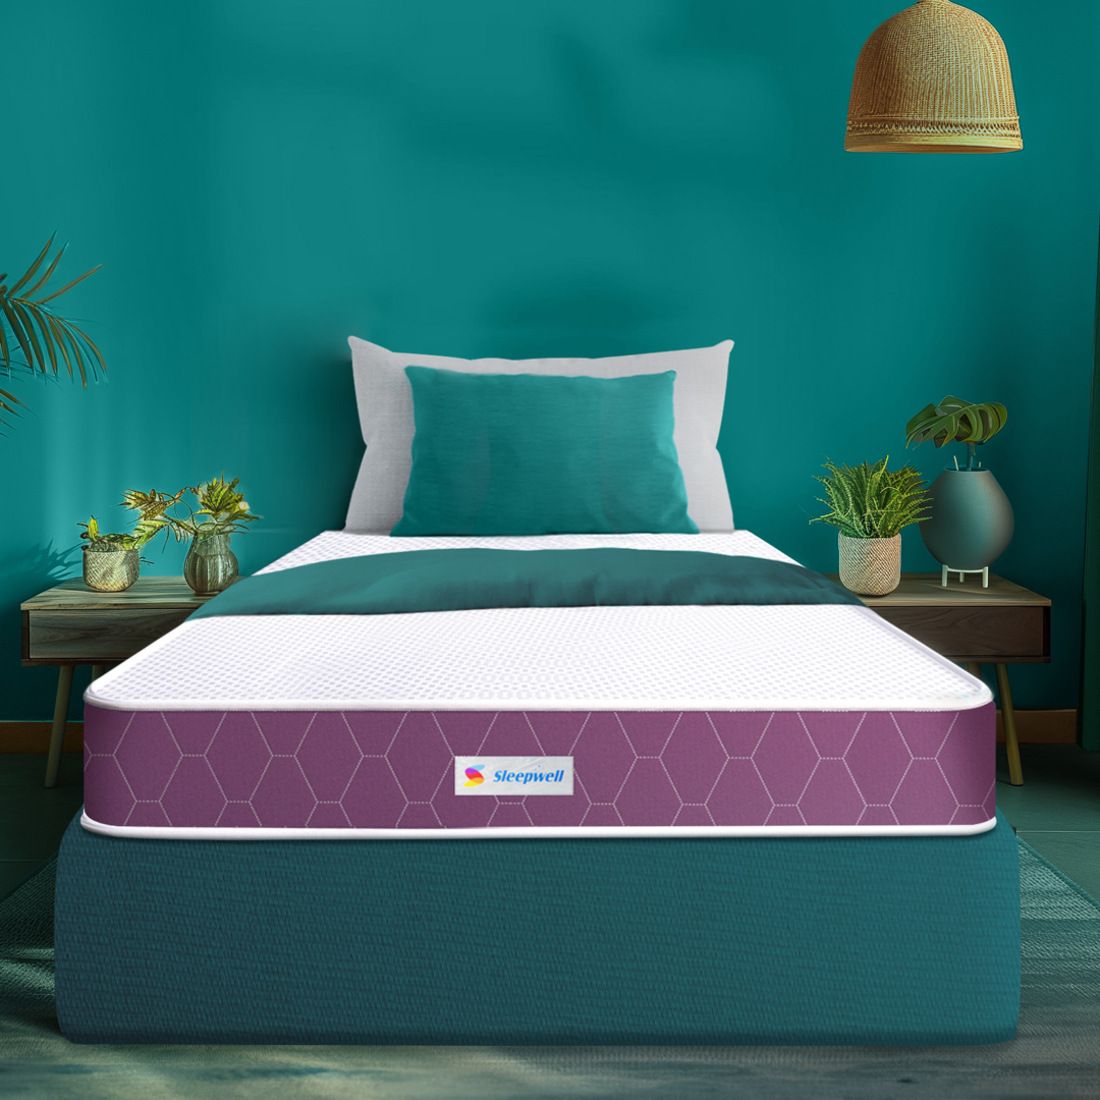 Sleepwell Ortho Mattress | Quilted | 8-inch Single Bed Size, Impressions Memory Foam, Medium Firm Mattress(Purple, 75x36X8)